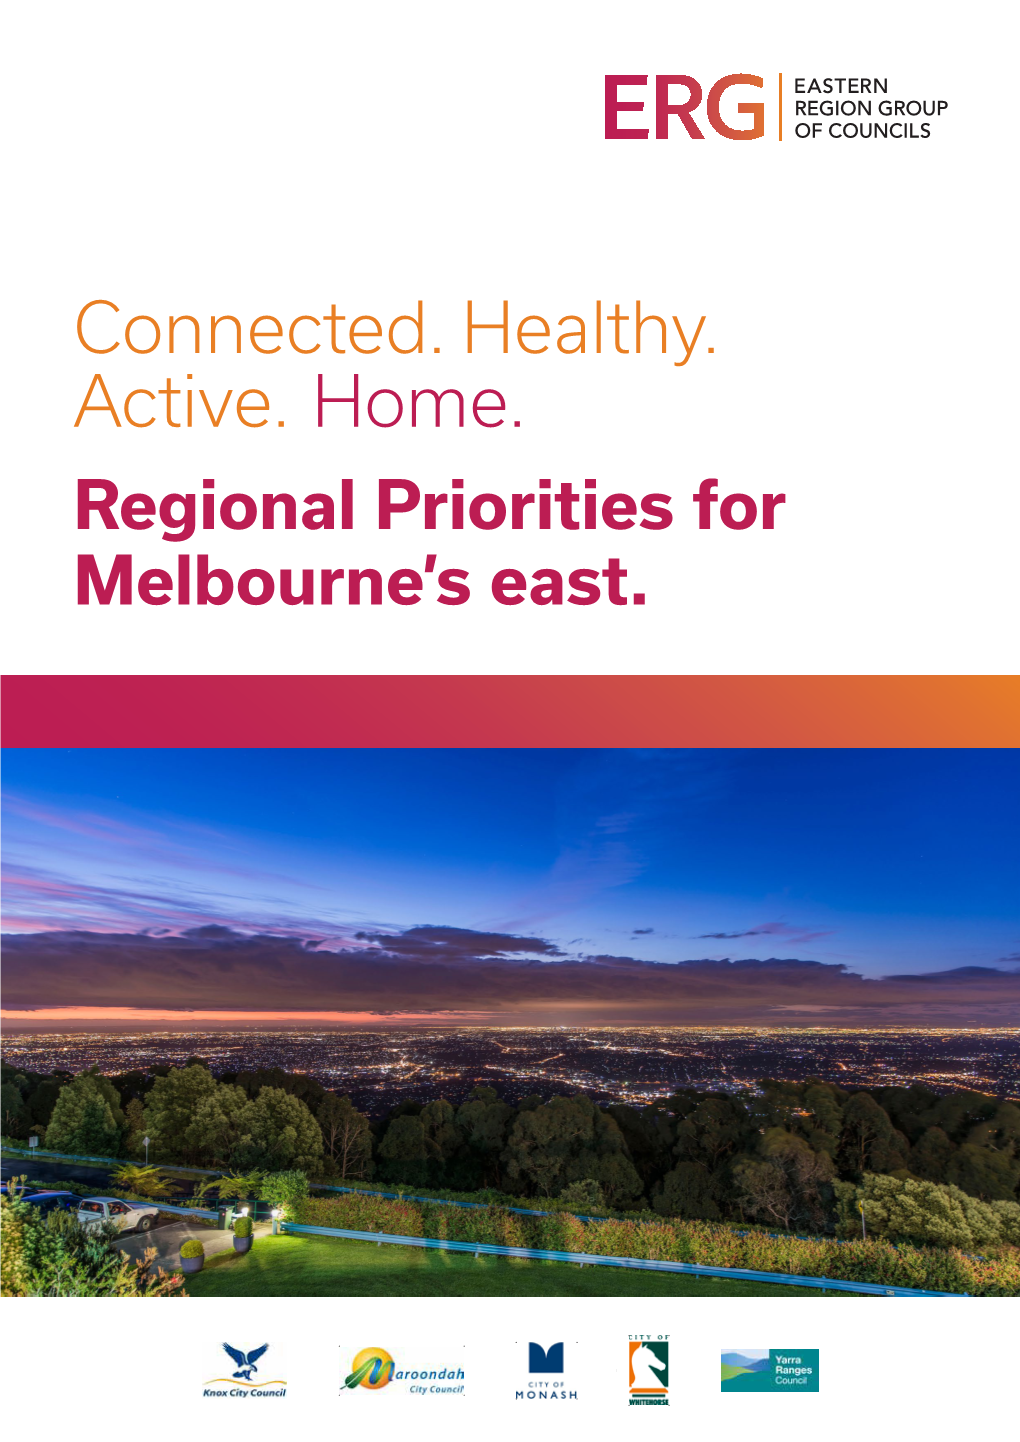 Regional Priorities for Melbourne's East